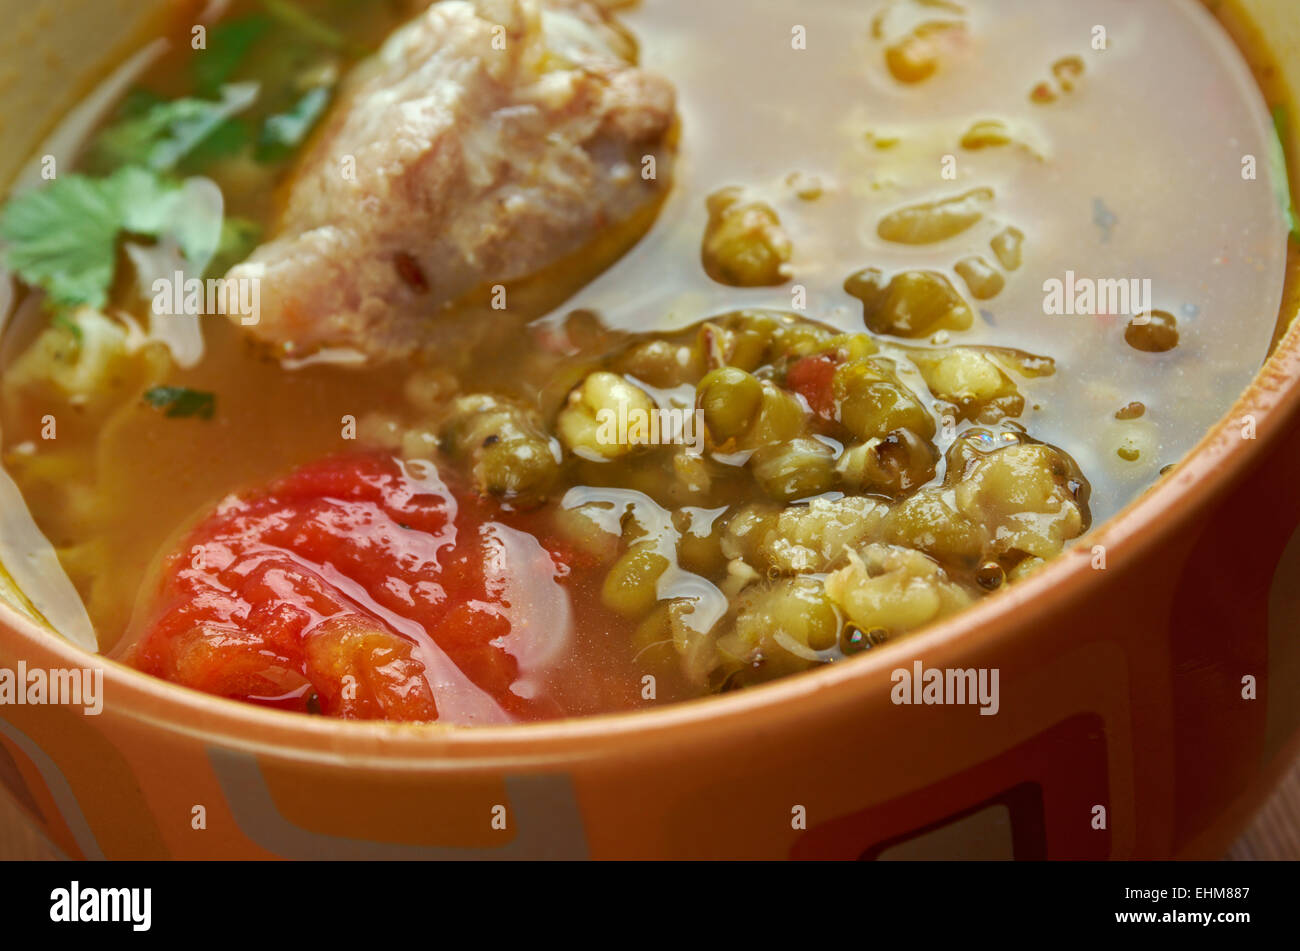 soup shourpa with moong dal .Uzbek cuisine Stock Photo